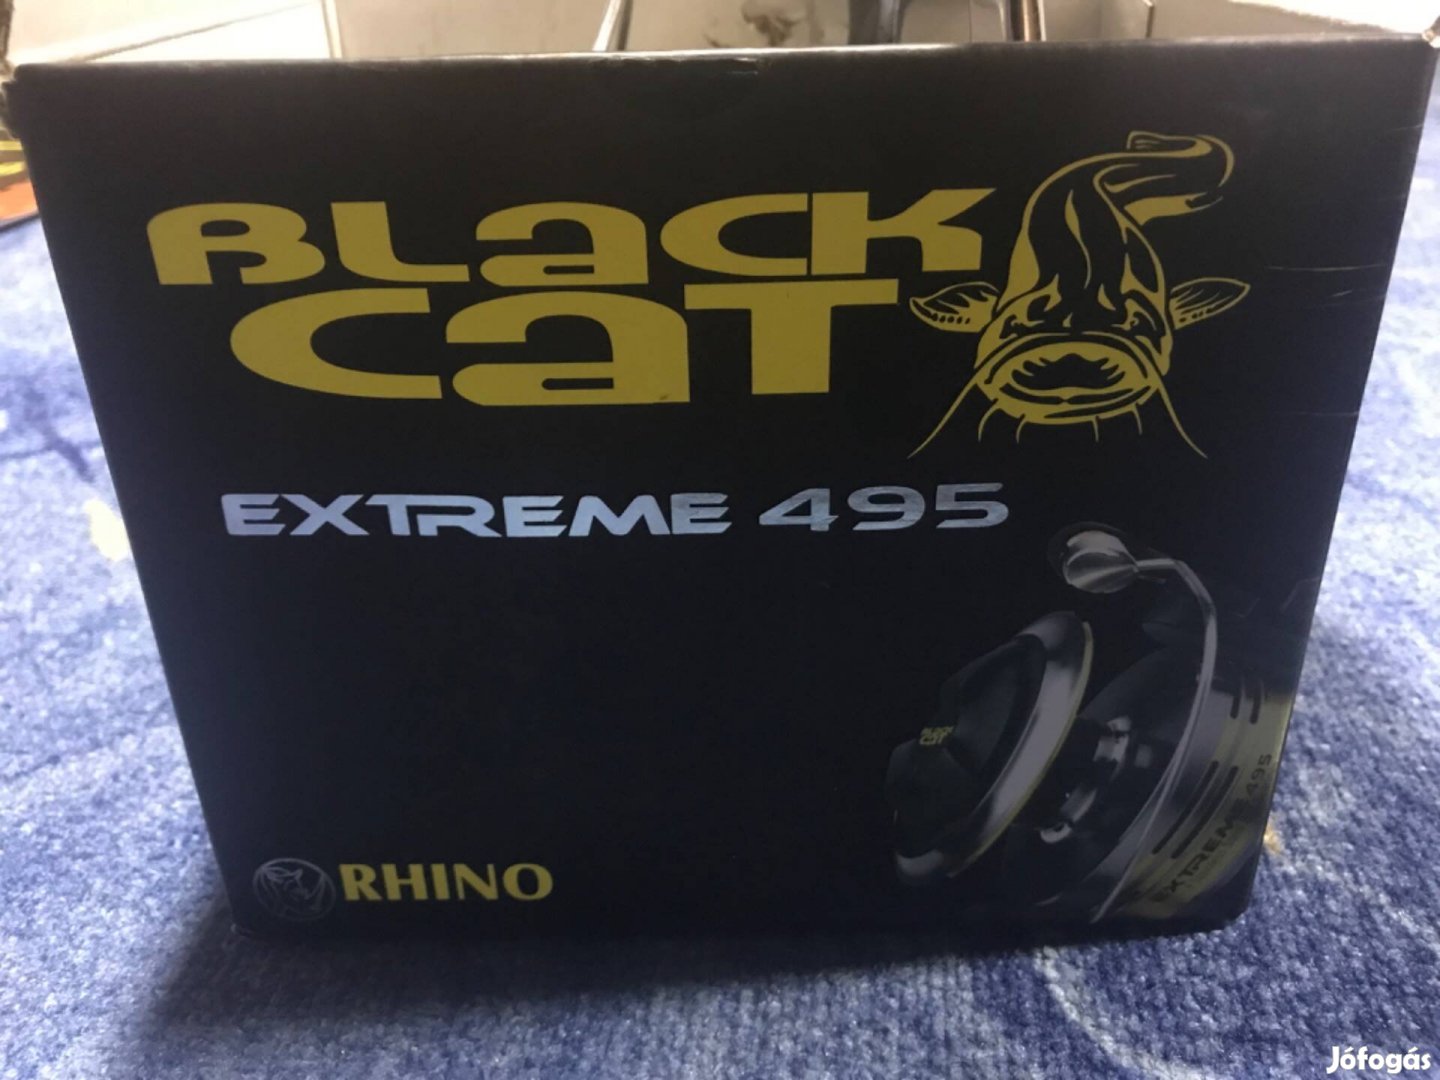 Black Cat Extreme 495